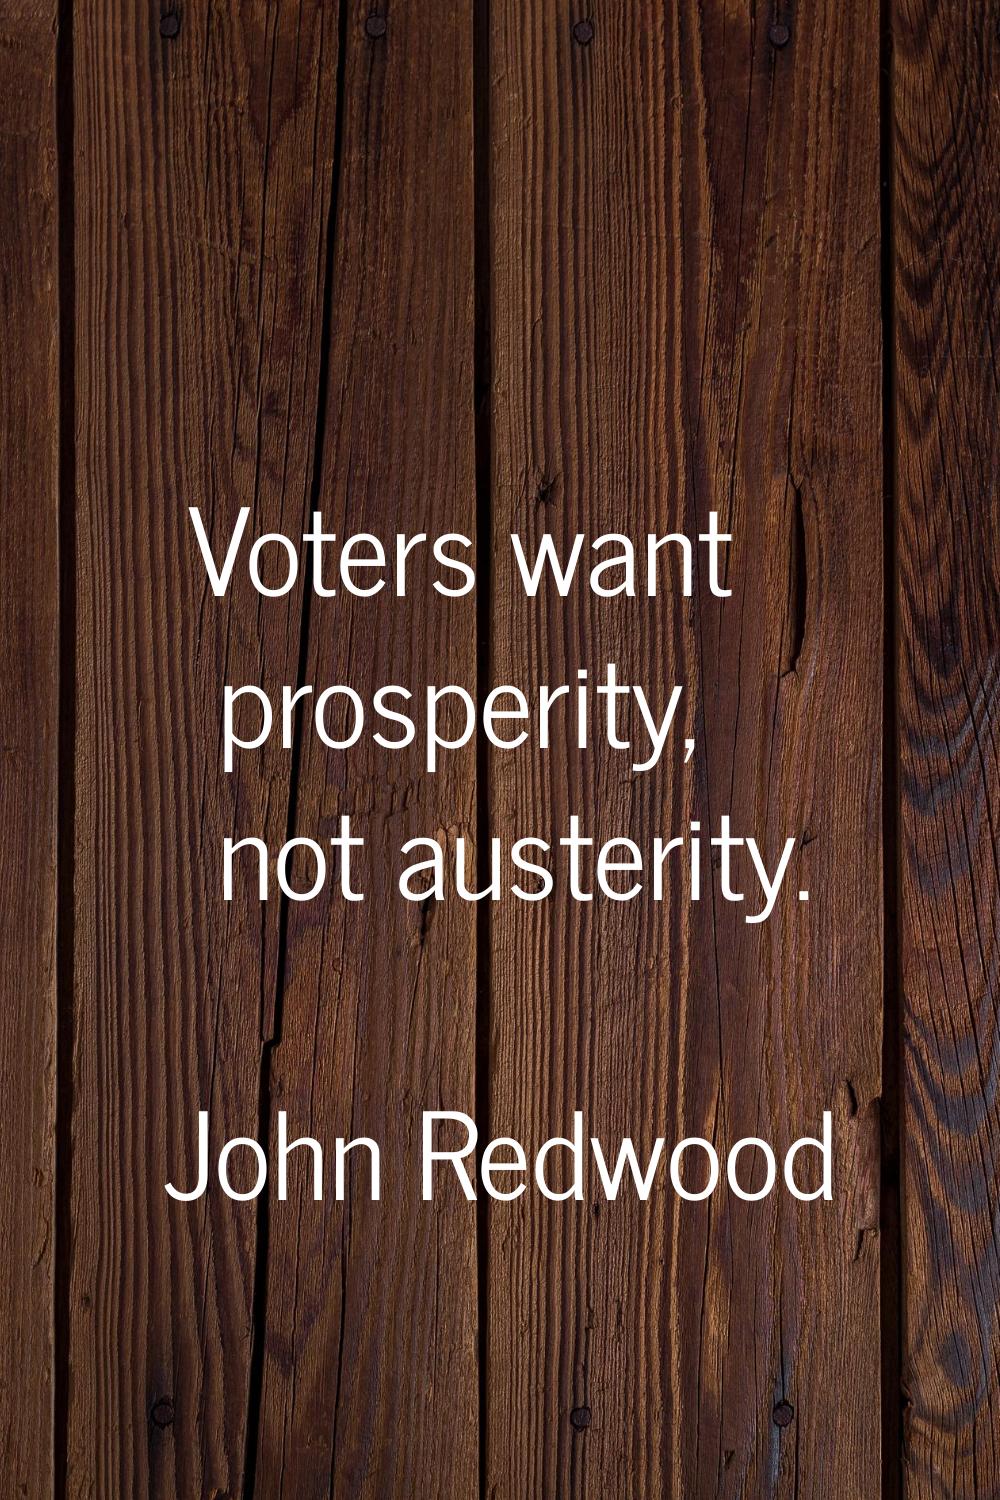 Voters want prosperity, not austerity.